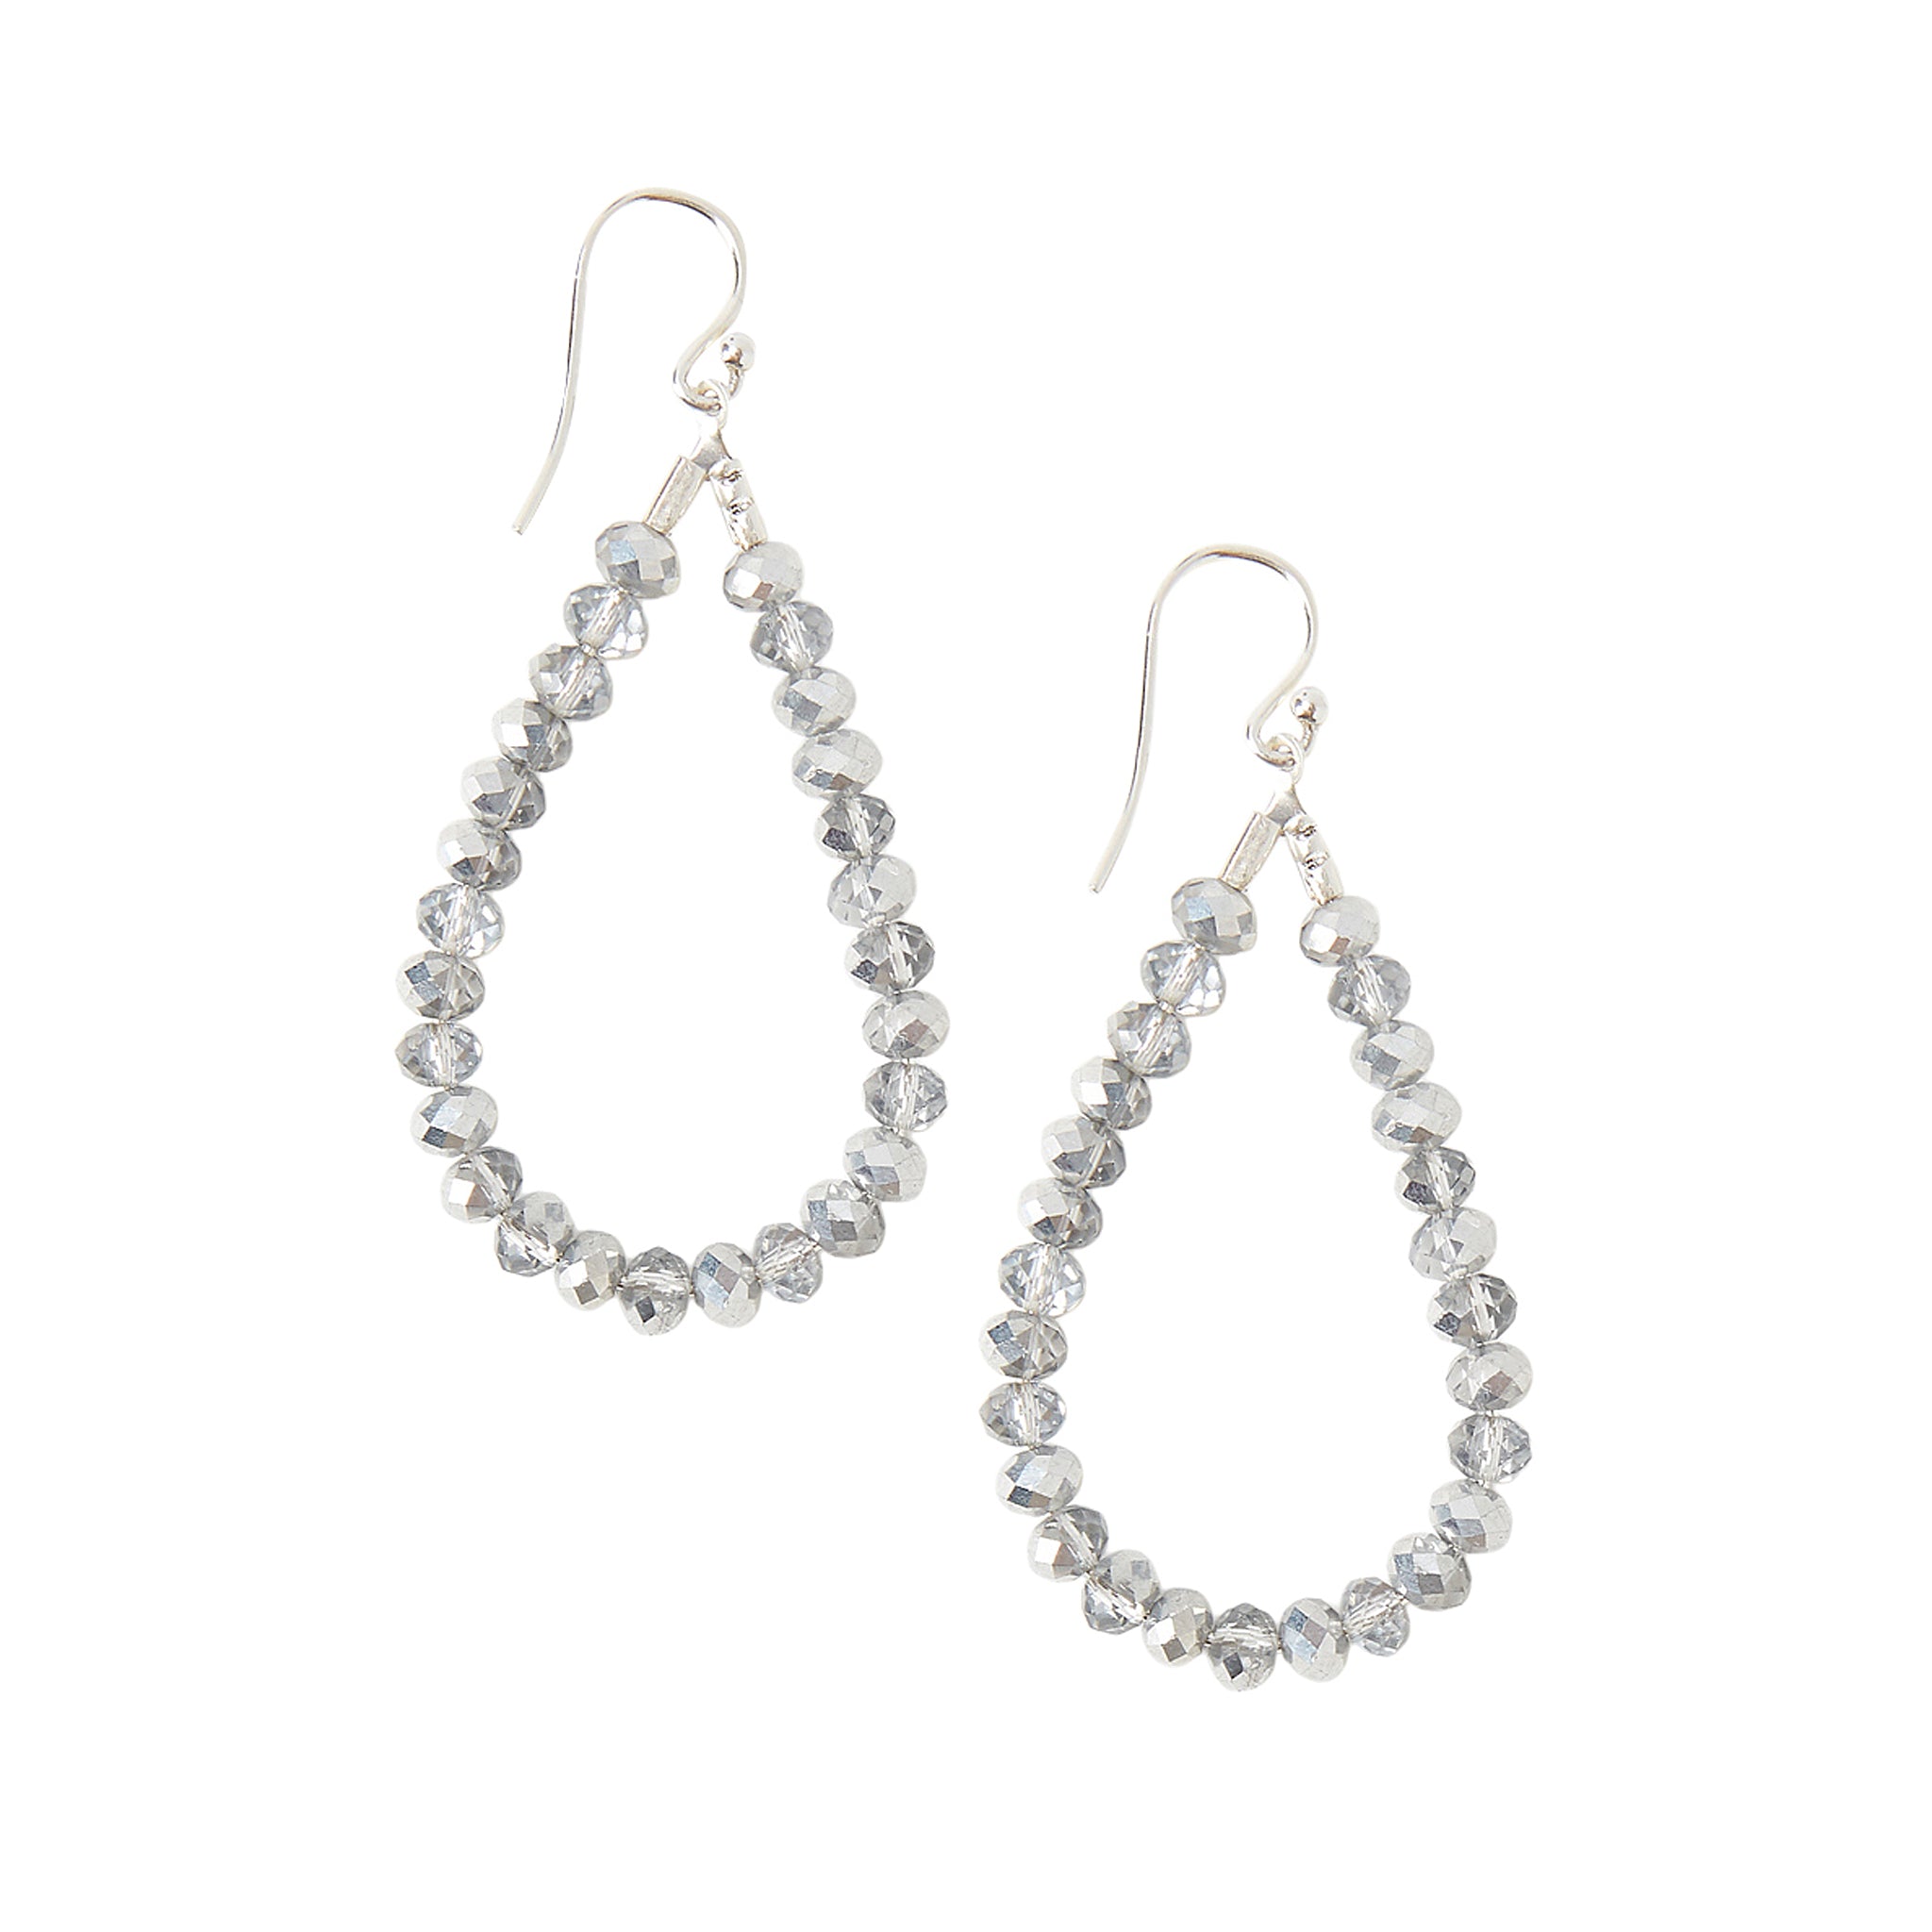 Chan Luu Silver Teardrop Dangle Earrings with Silver Crystals